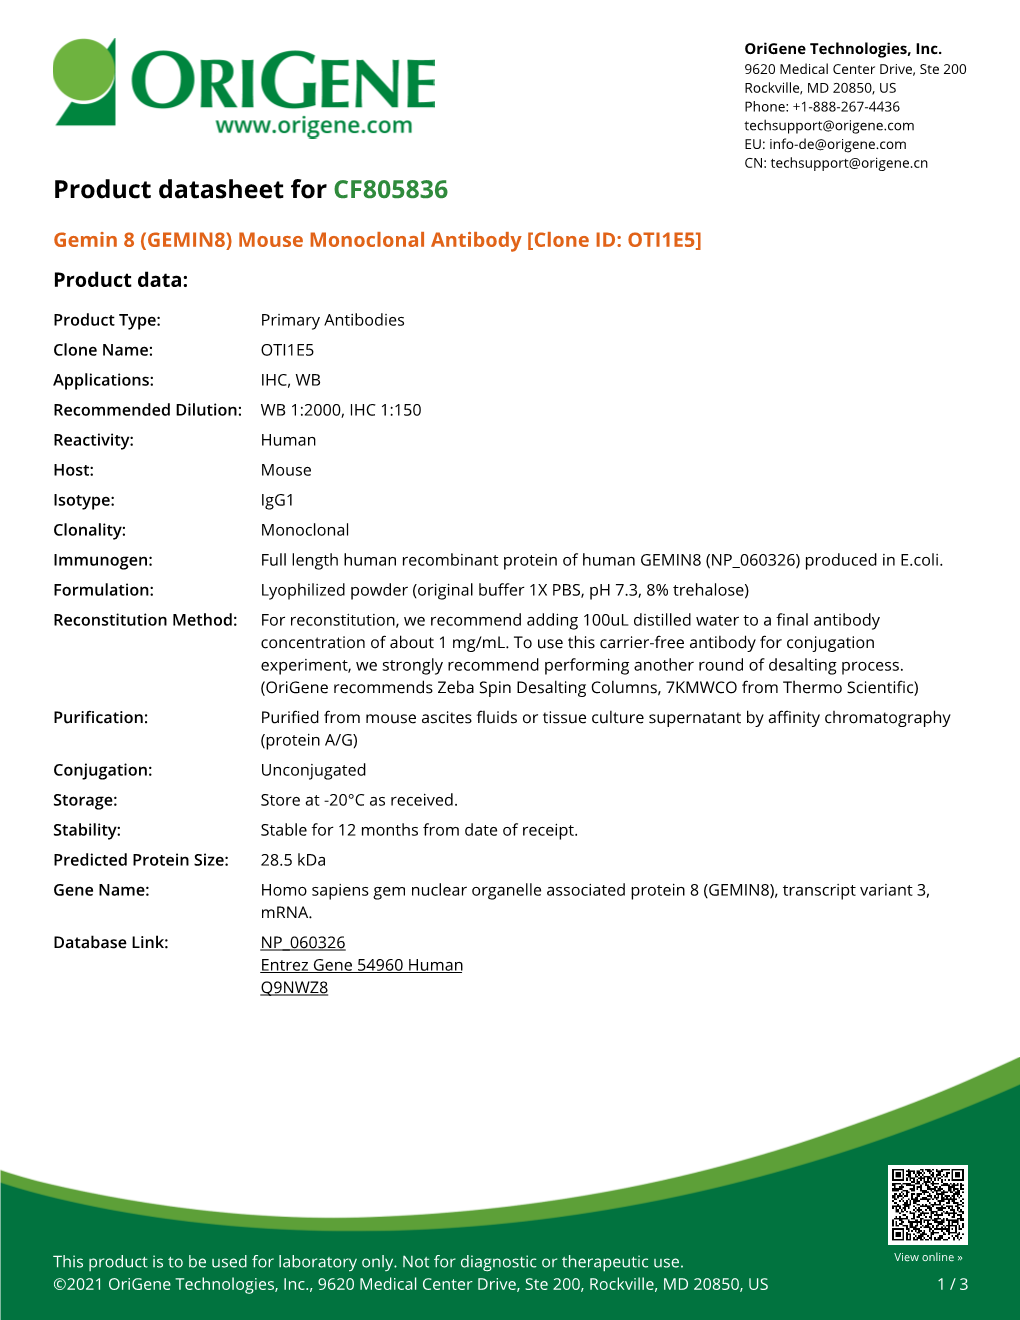 Gemin 8 (GEMIN8) Mouse Monoclonal Antibody [Clone ID: OTI1E5] Product Data